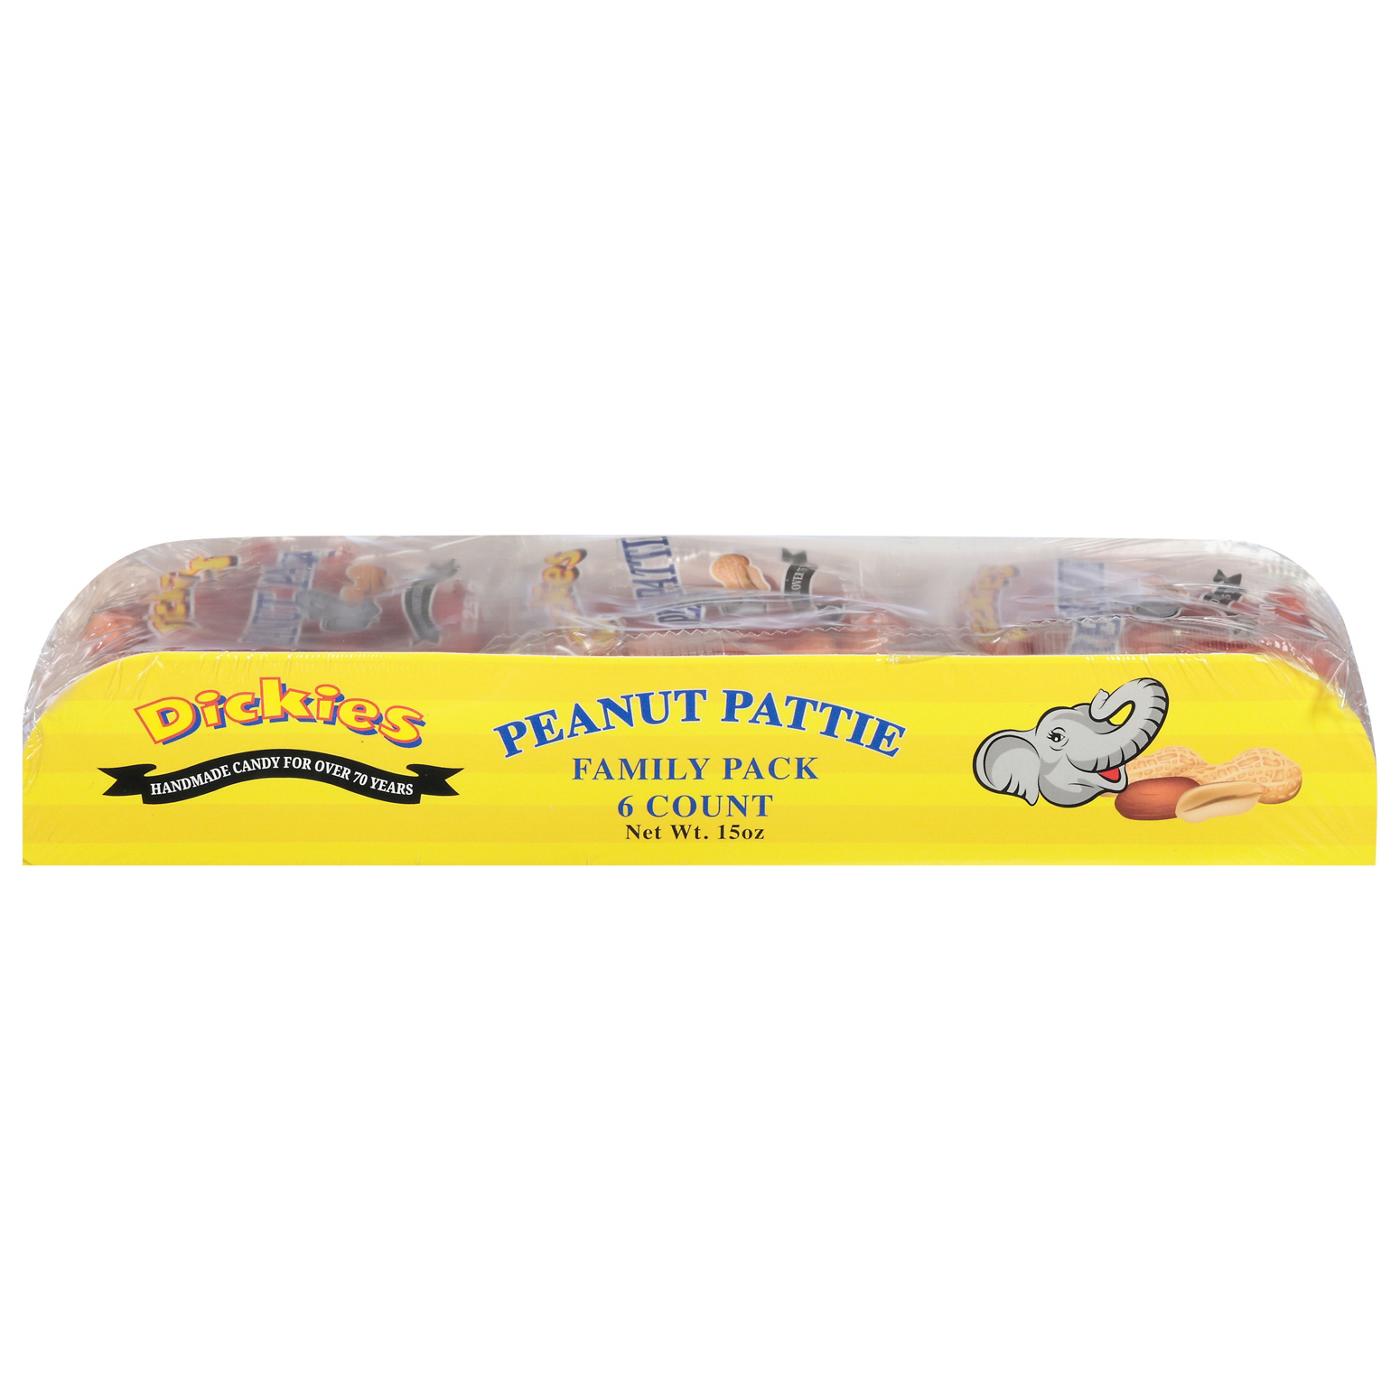 Dickies Peanut Patties Family Pack; image 1 of 2